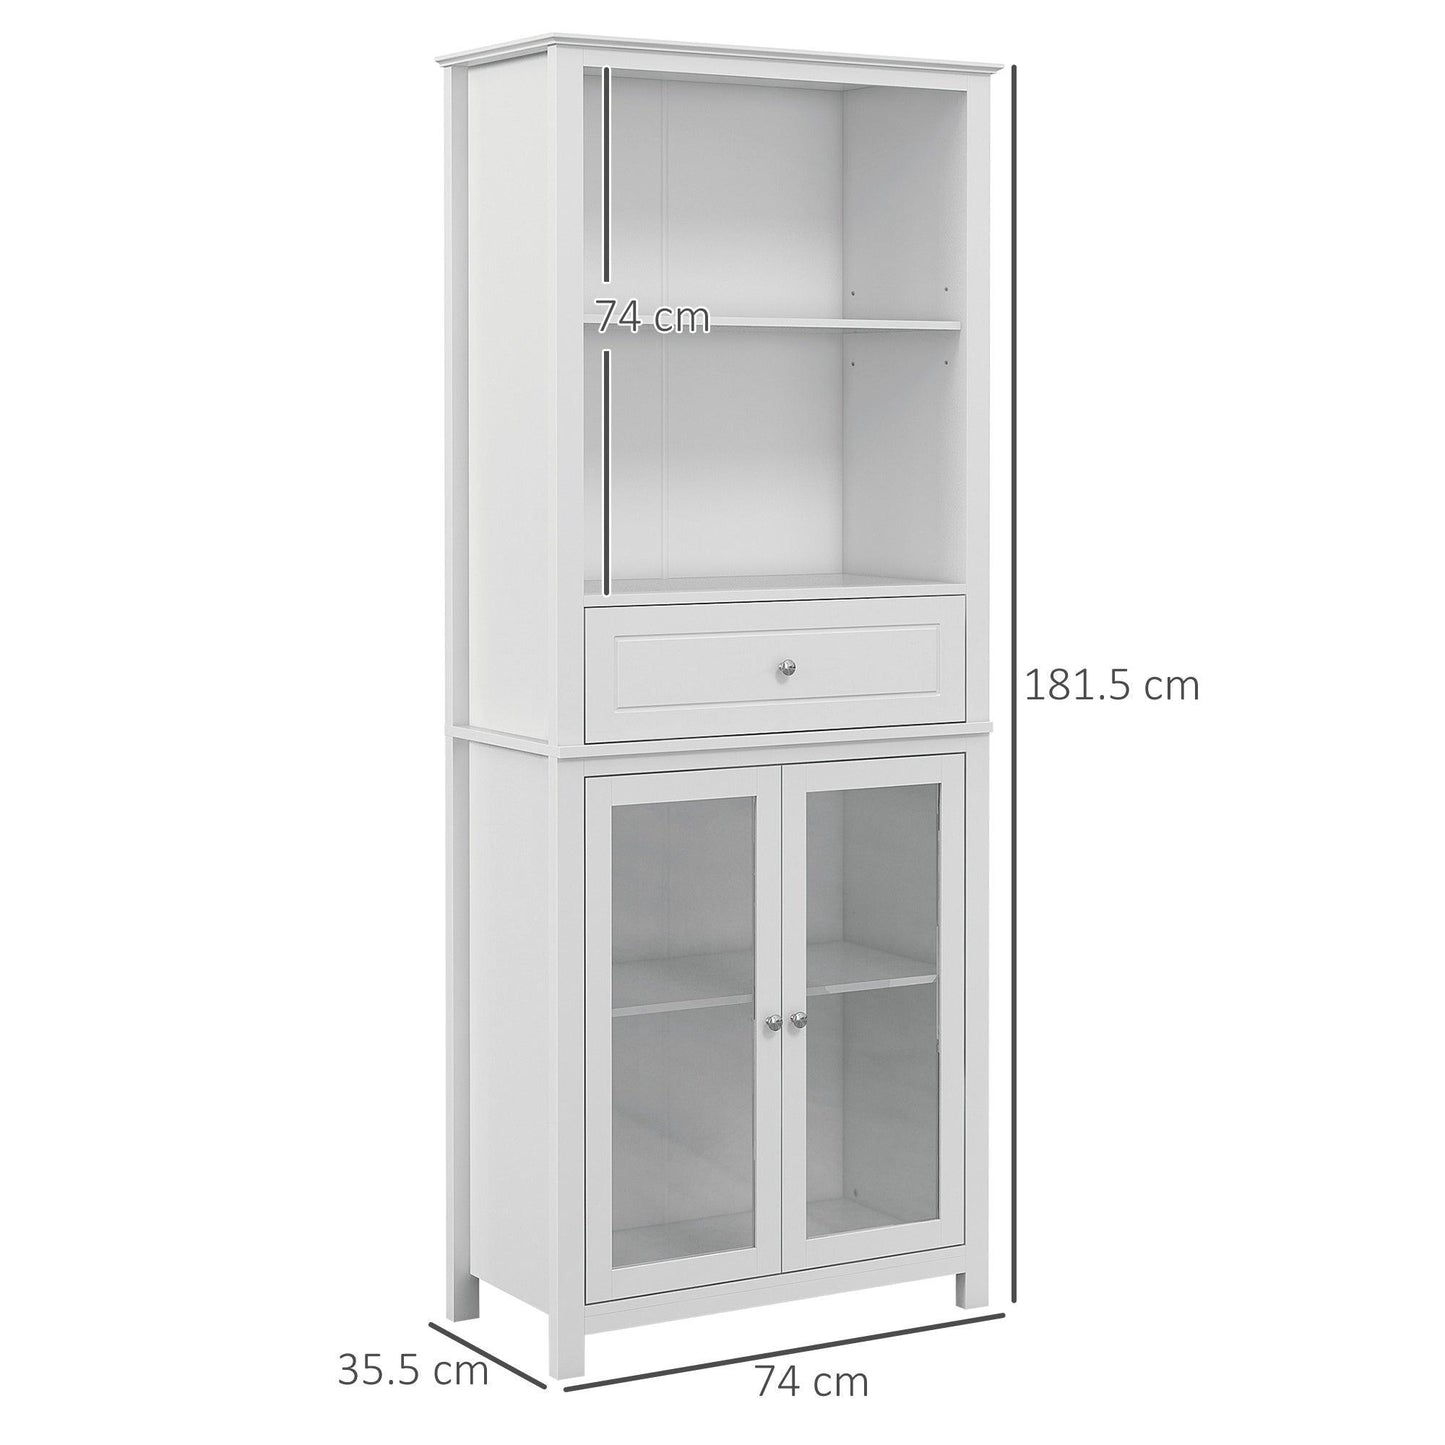 HOMCOM Kitchen Cupboard with Glass Doors, Drawer, and Open Shelf - ALL4U RETAILER LTD